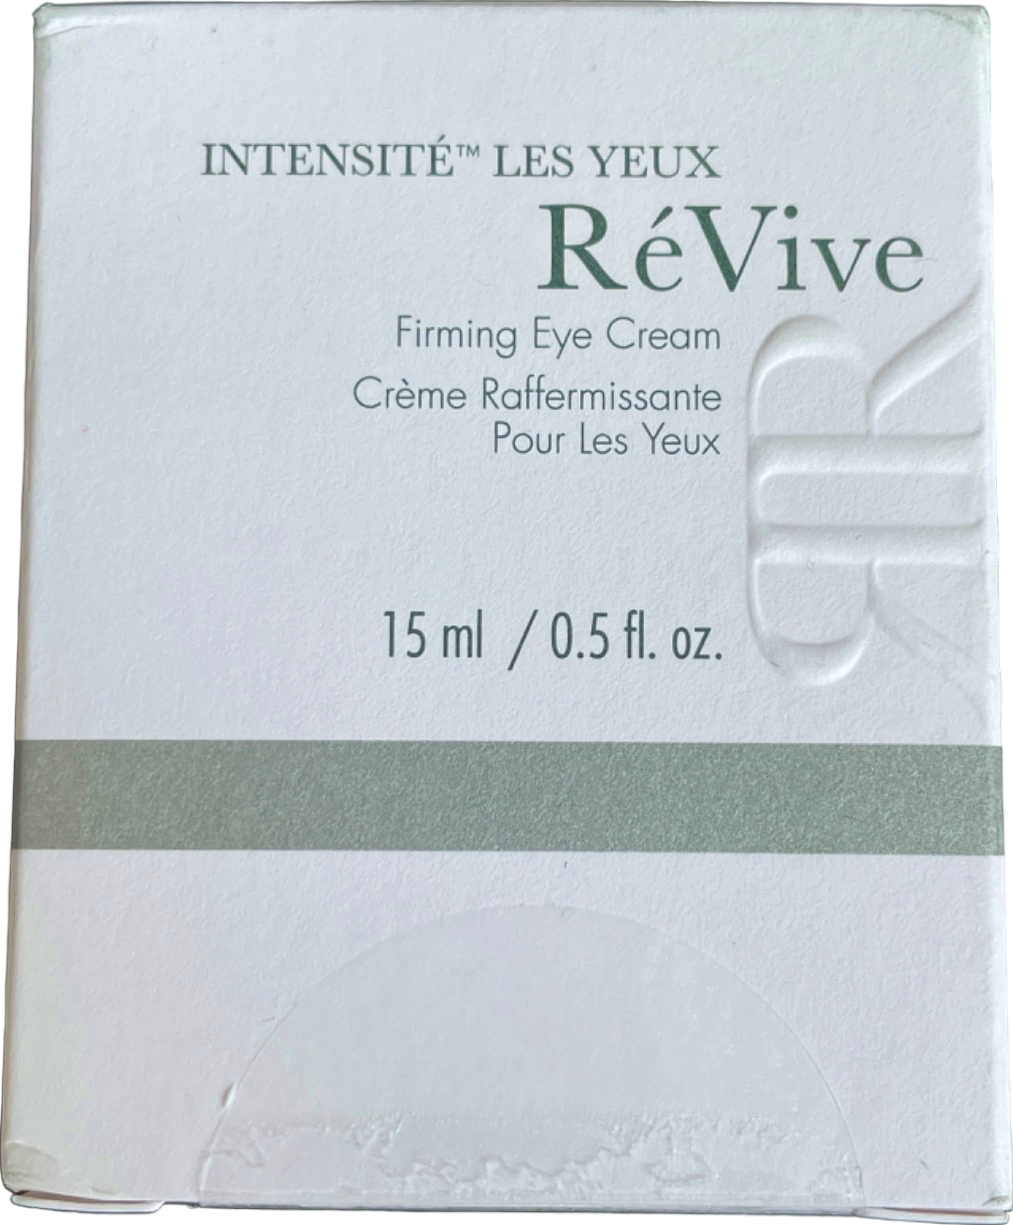 RéVive Intensité Les Yeux Firming Eye Cream 15 ml